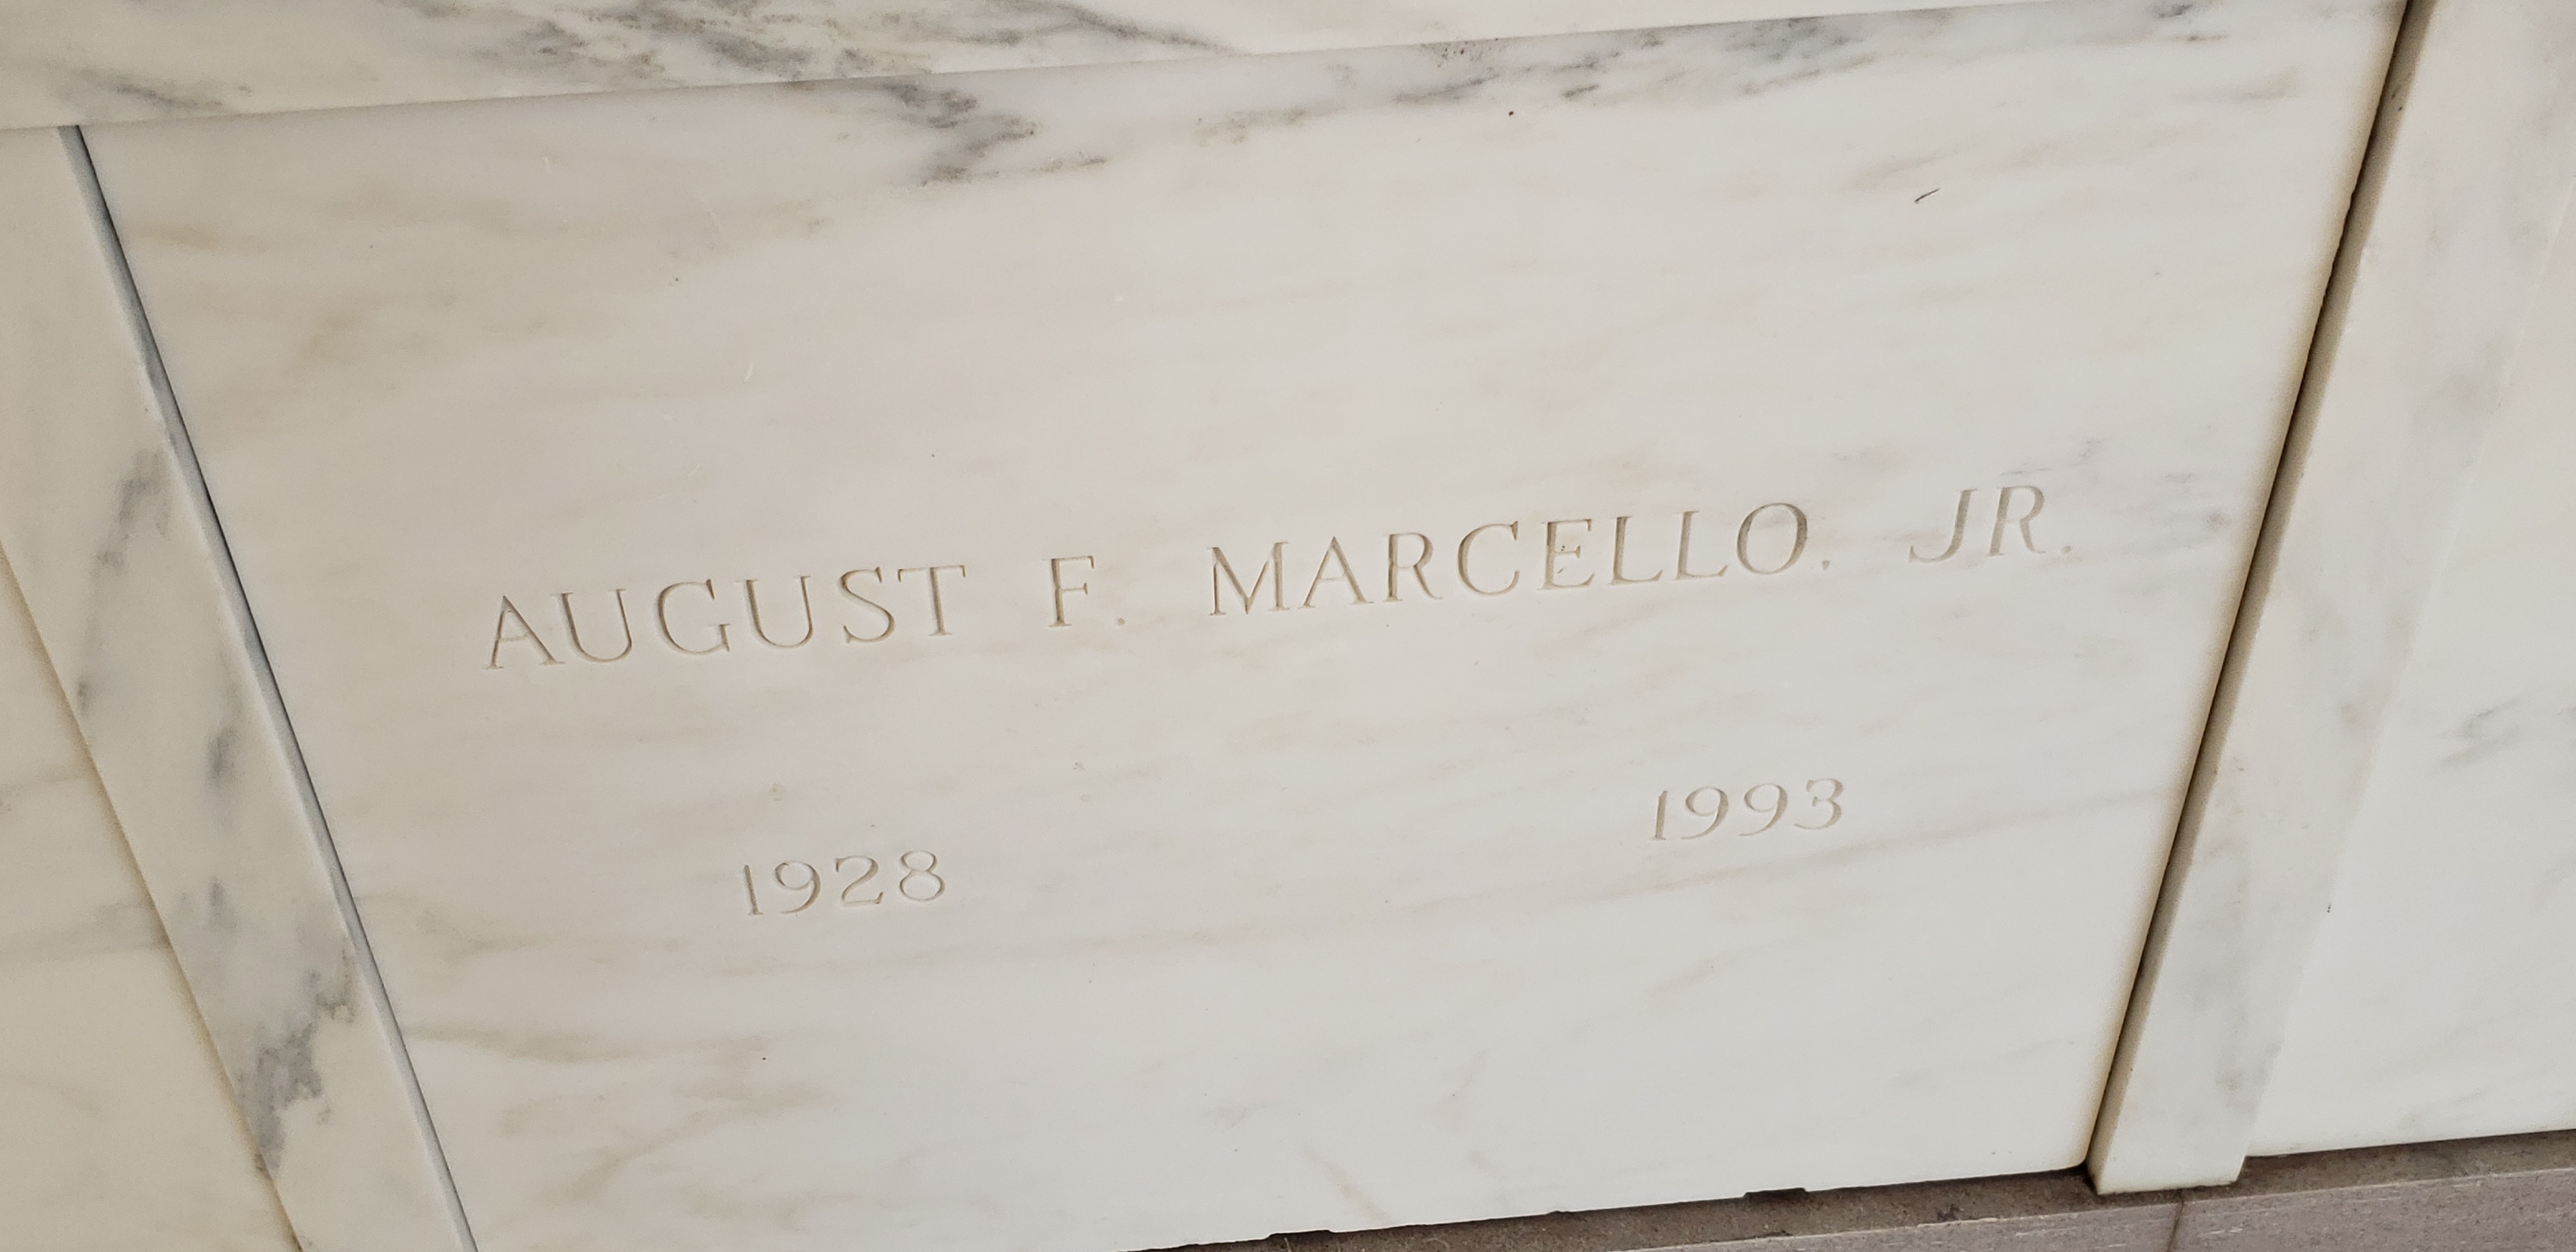 August F Marcello, Jr